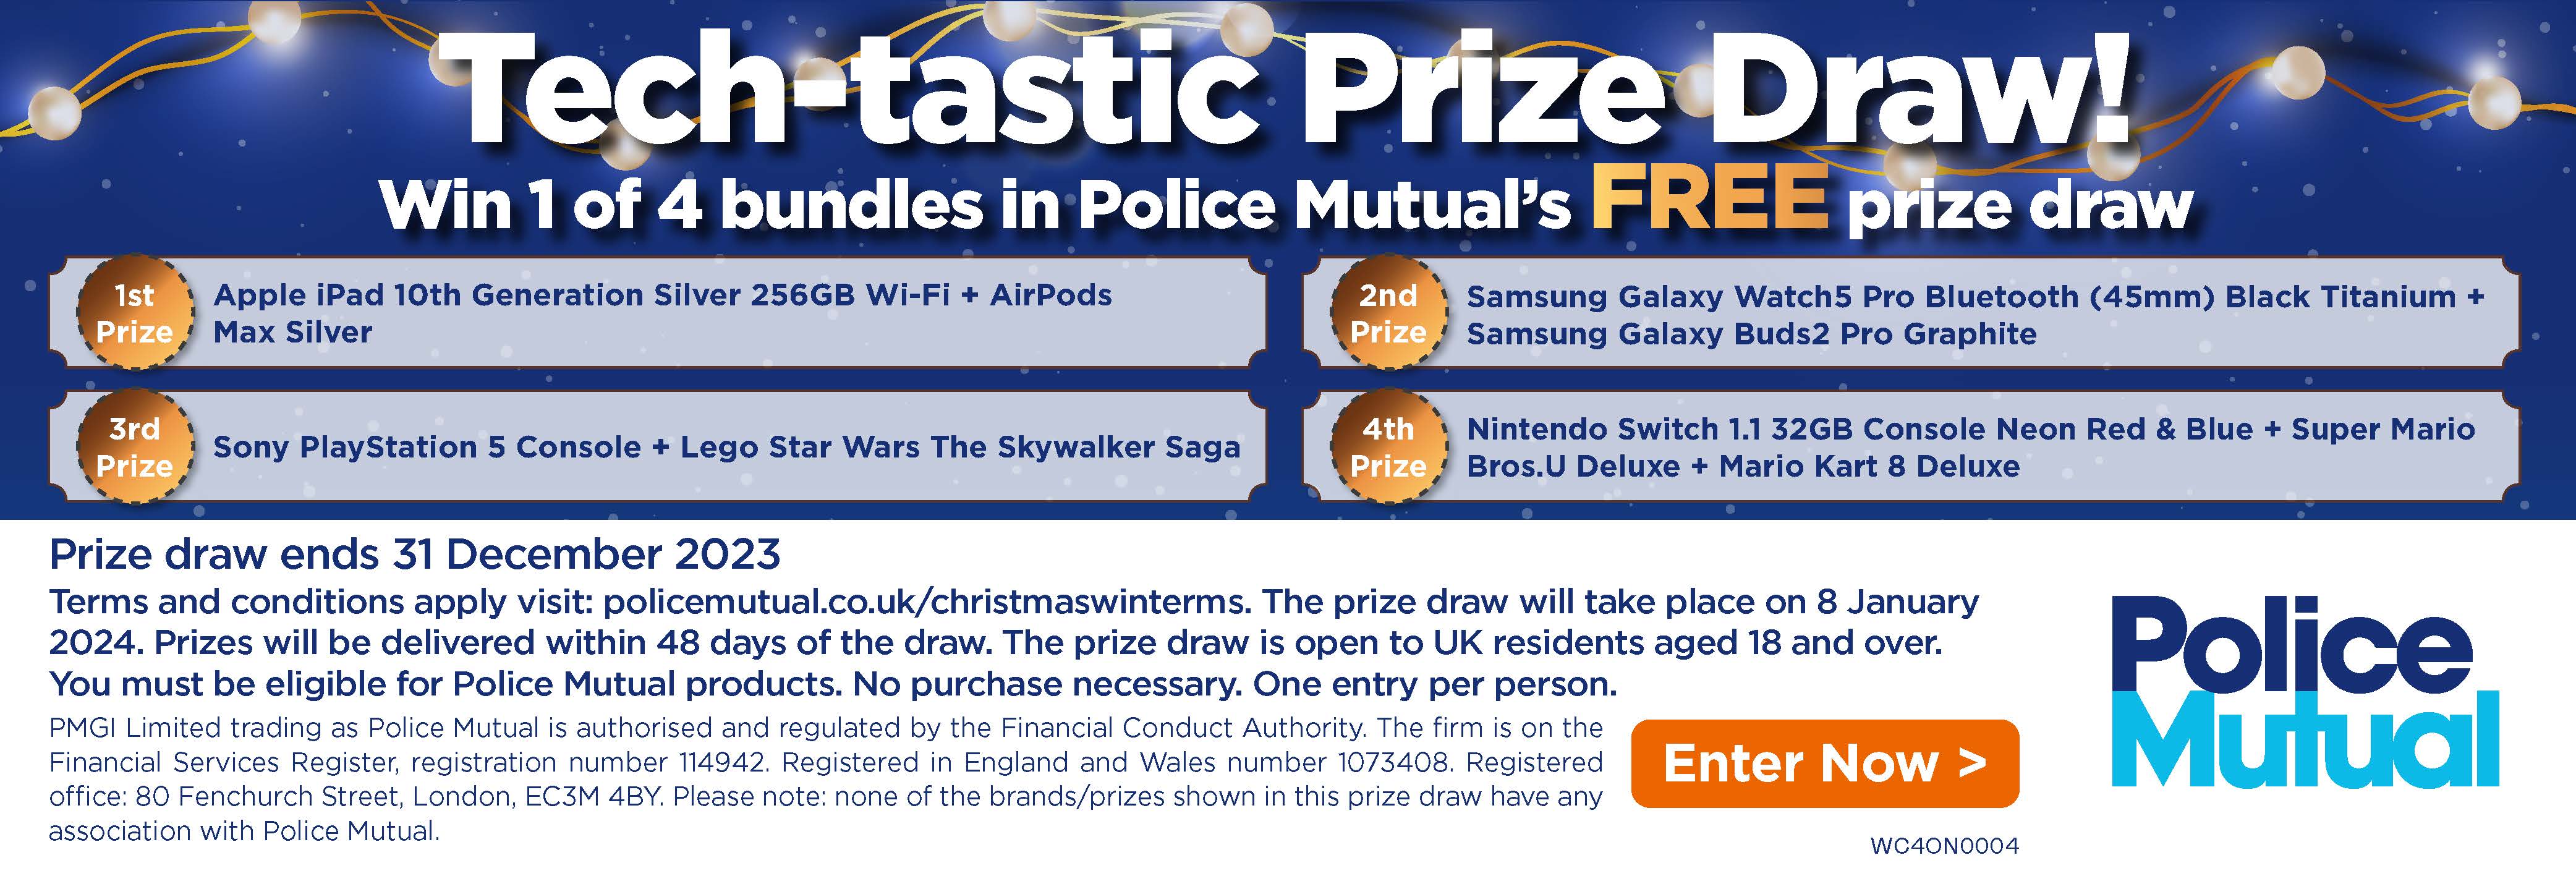 Police Mutual prize draw